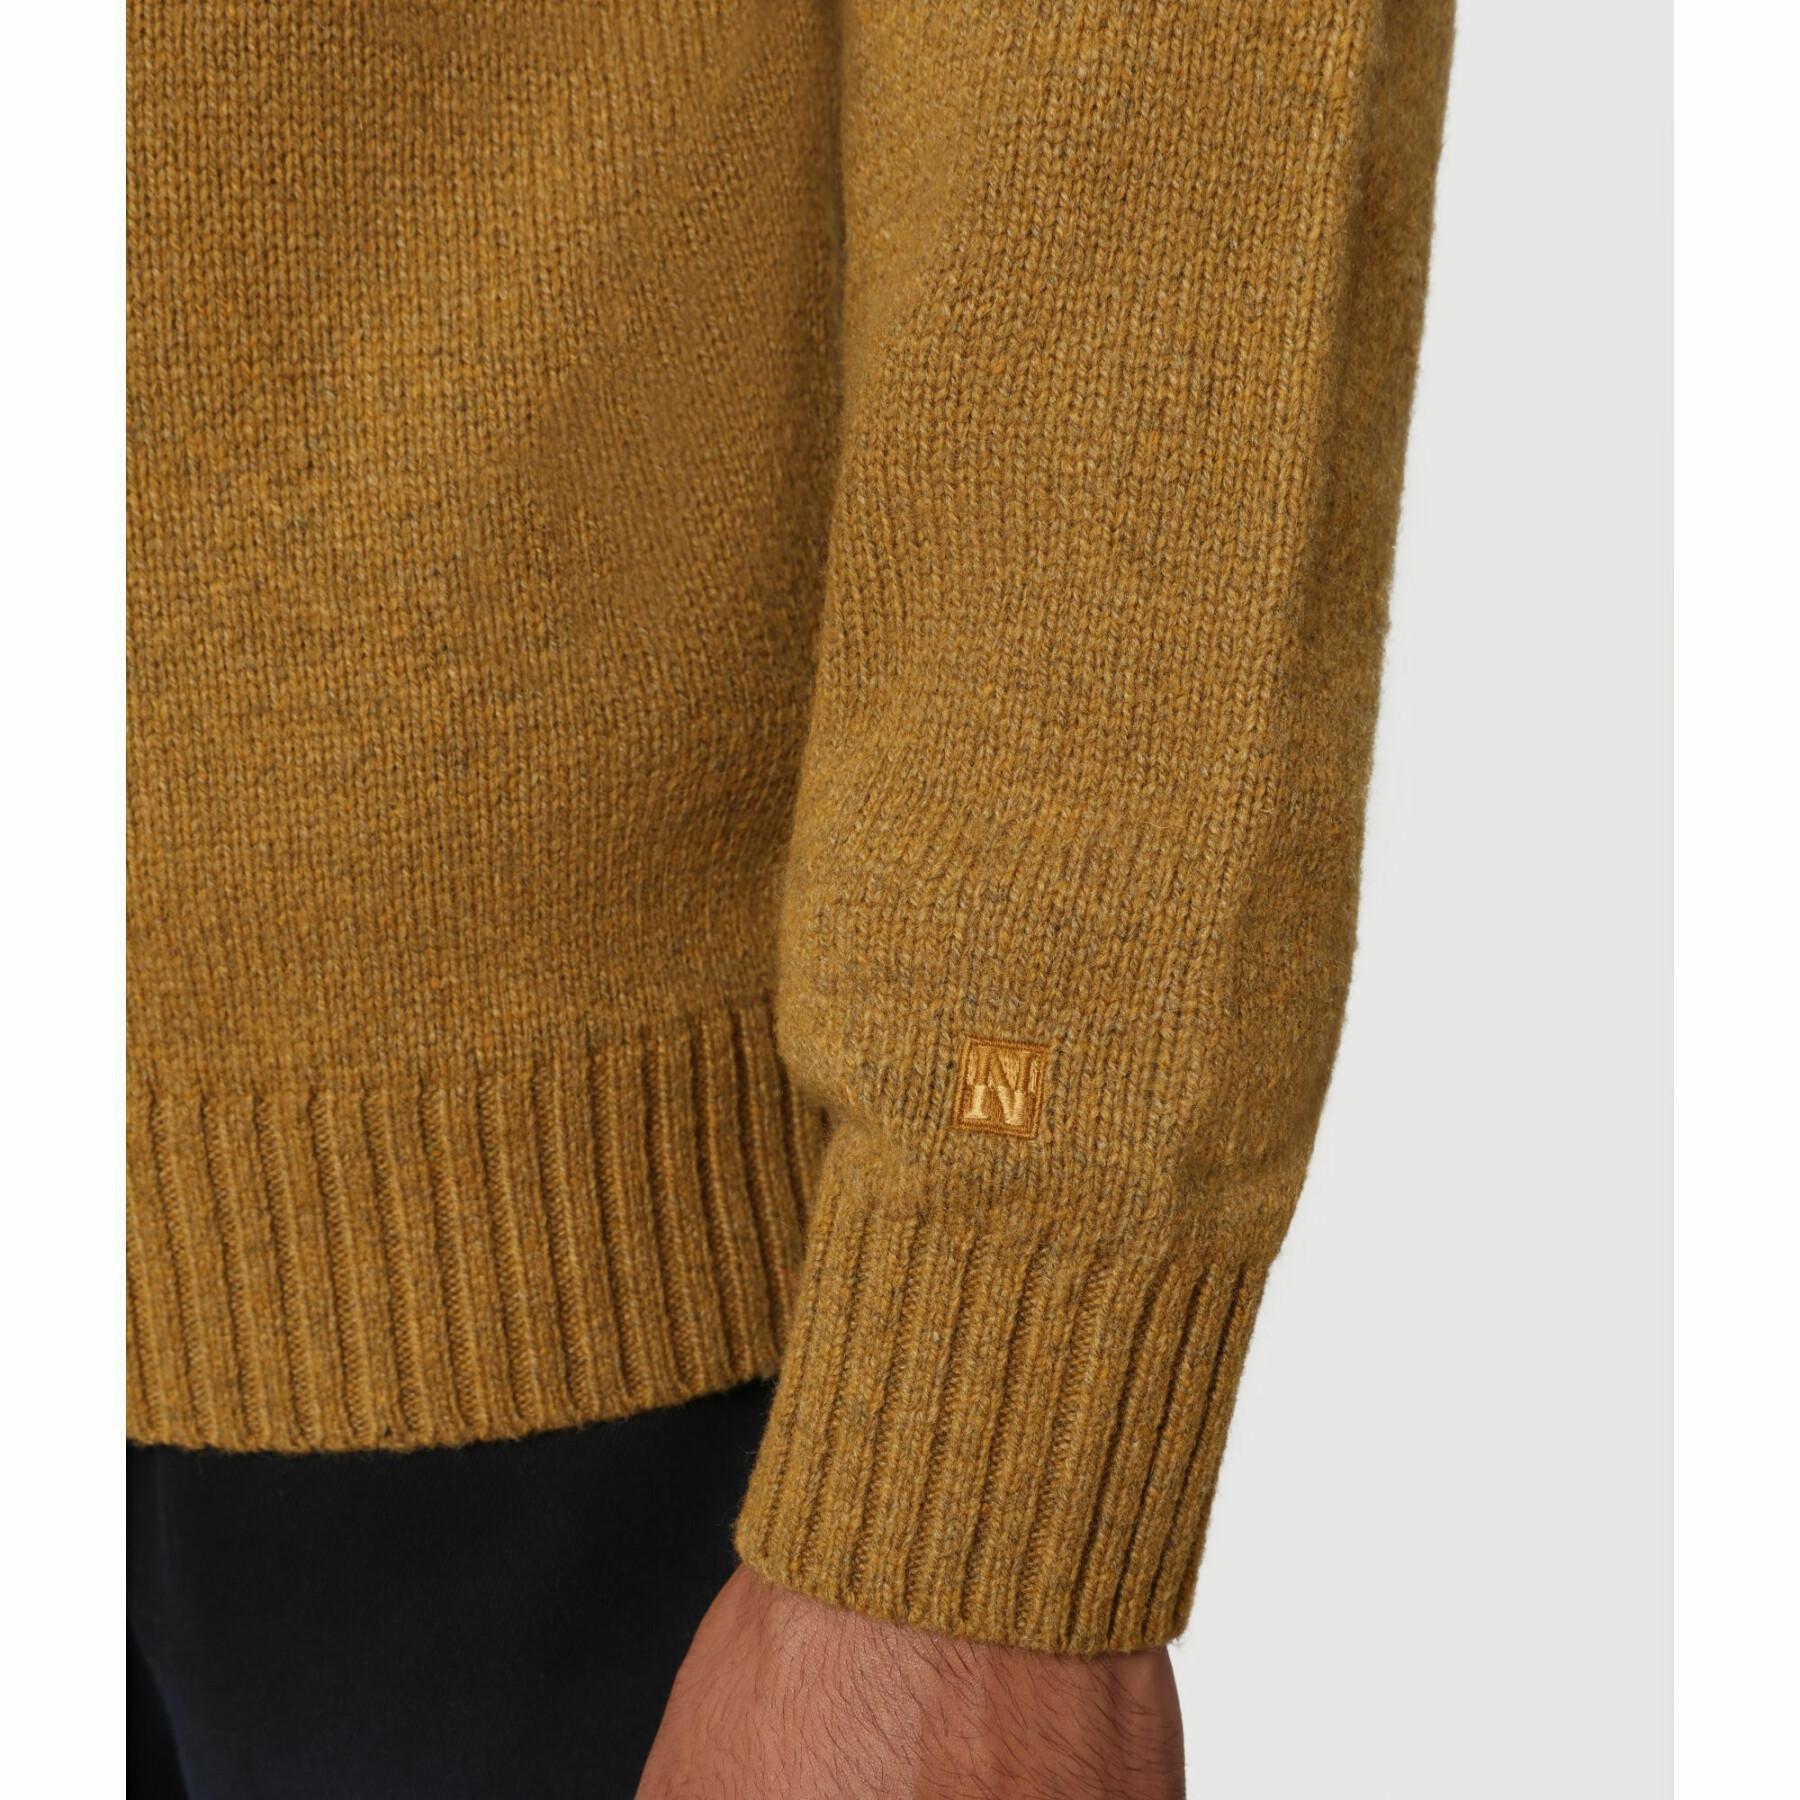 Zipped sweater Napapijri dainz